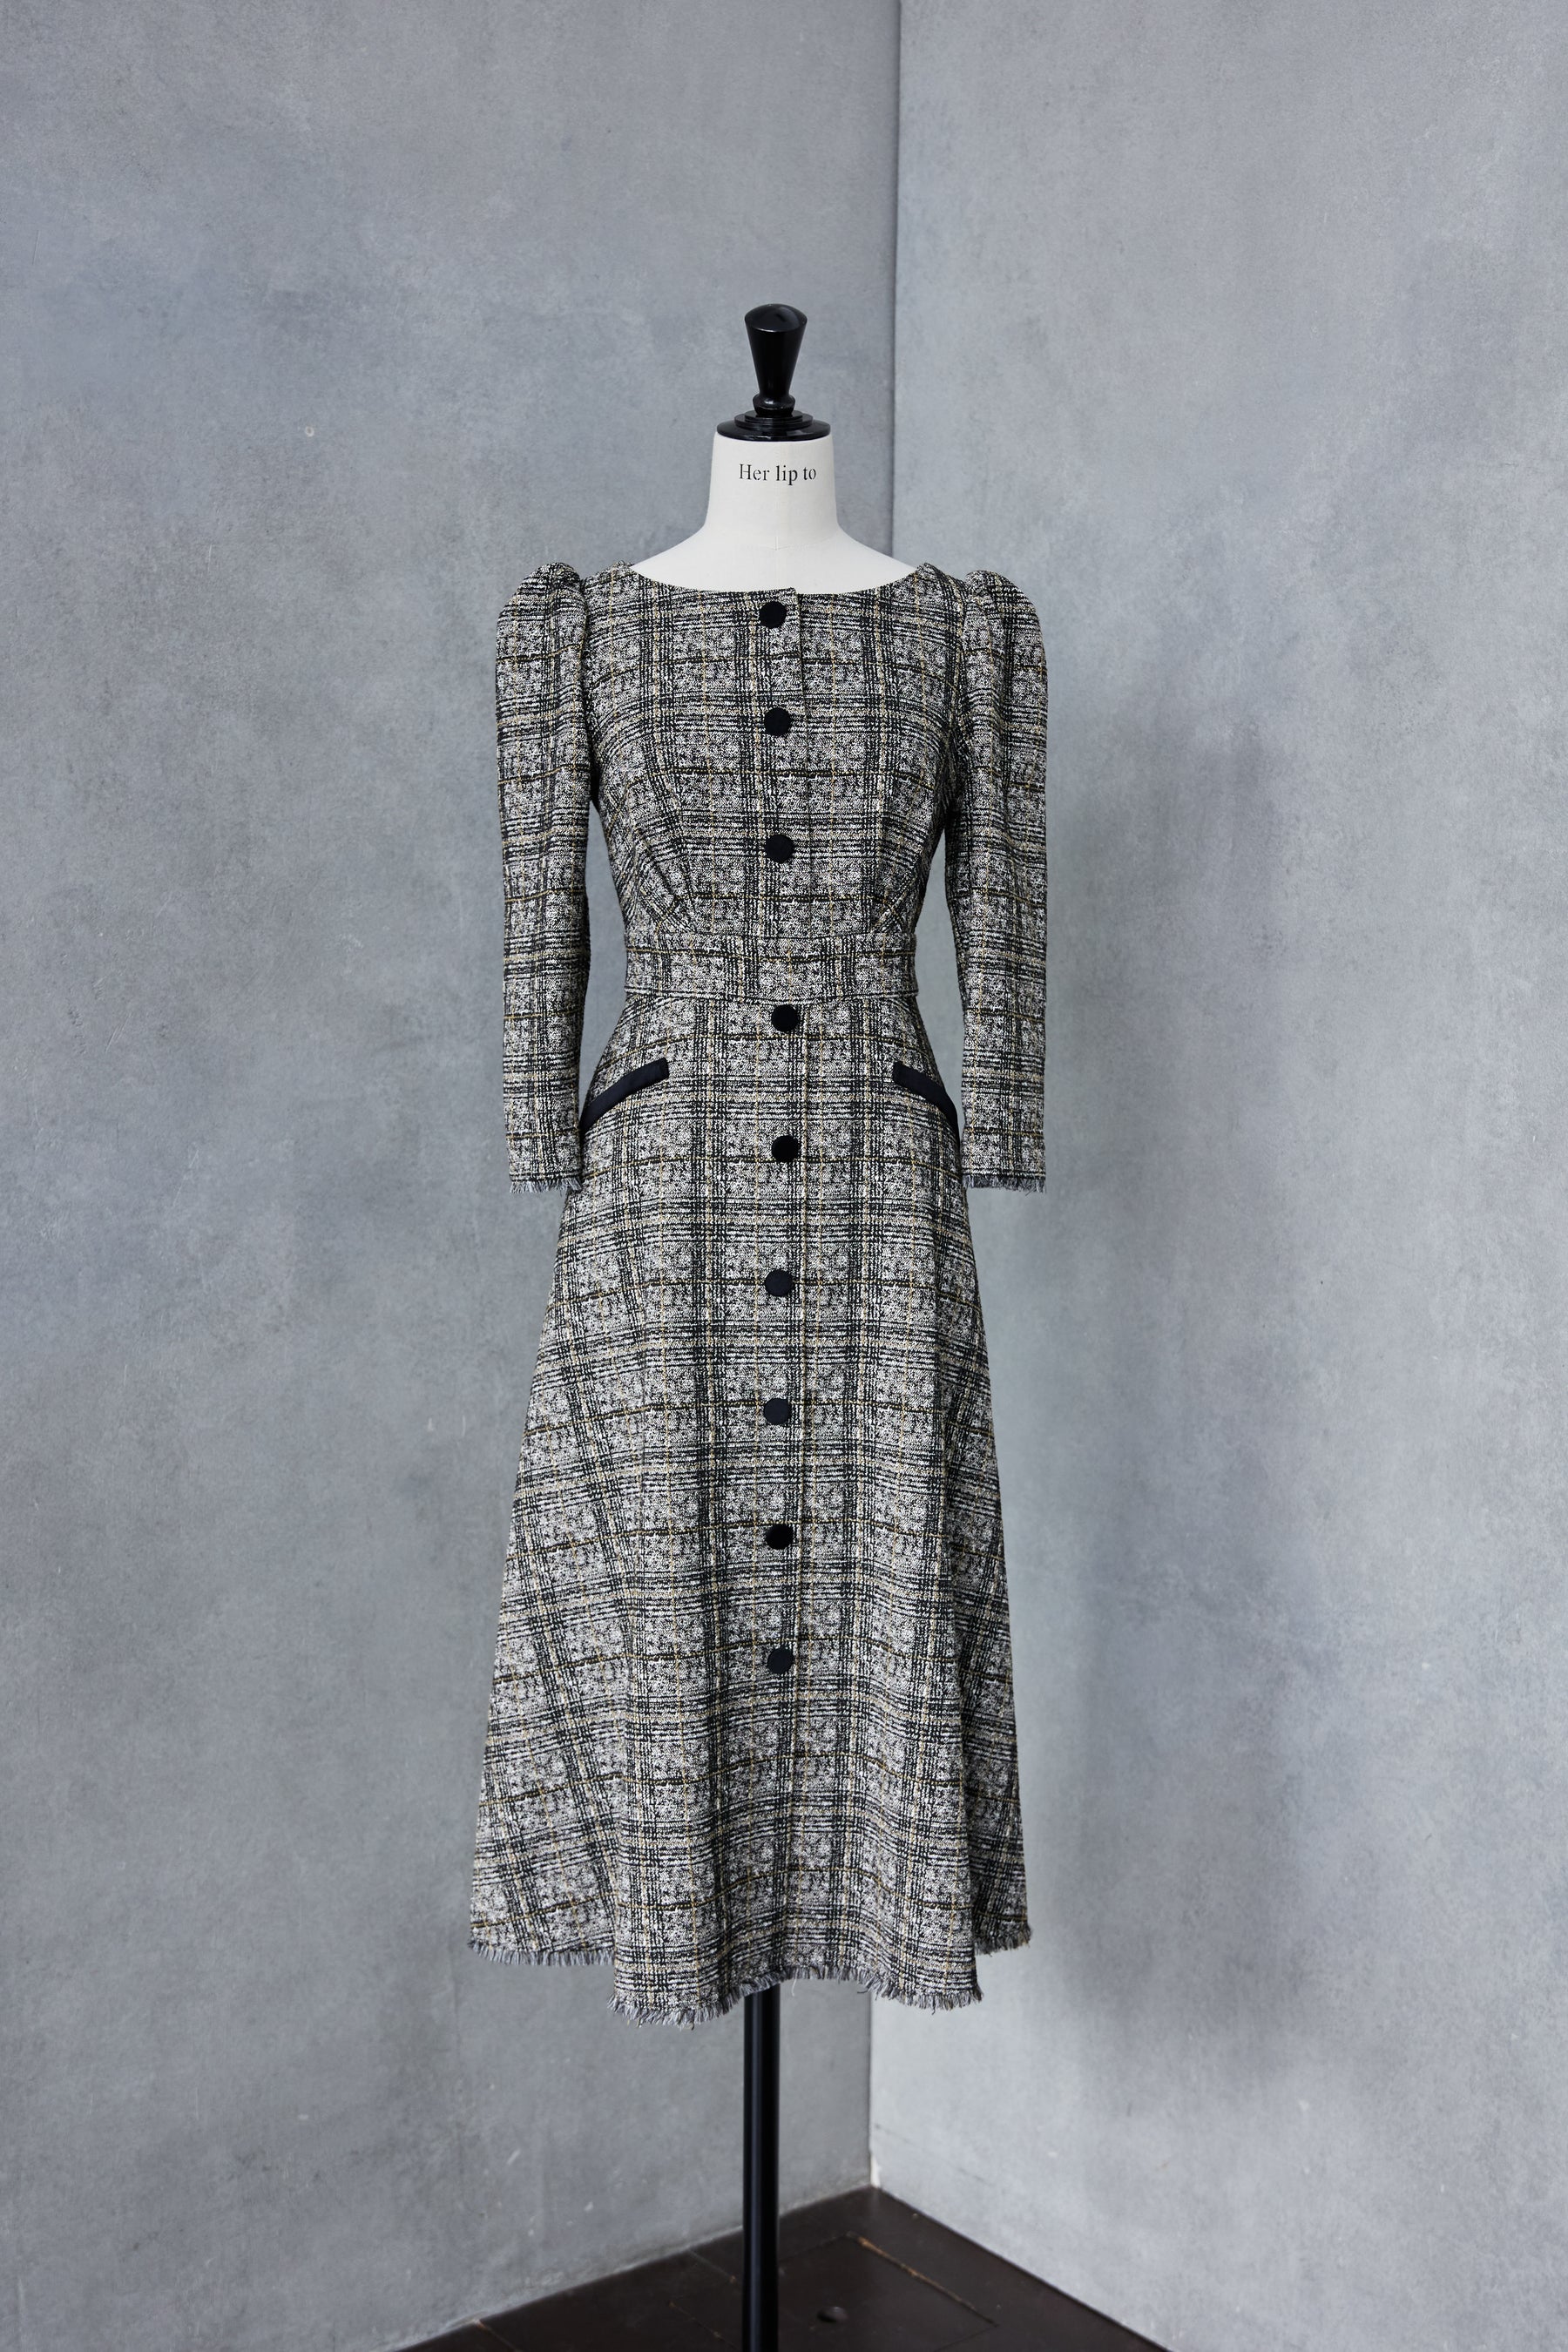 herlipto Classic Tweed Midi Dress